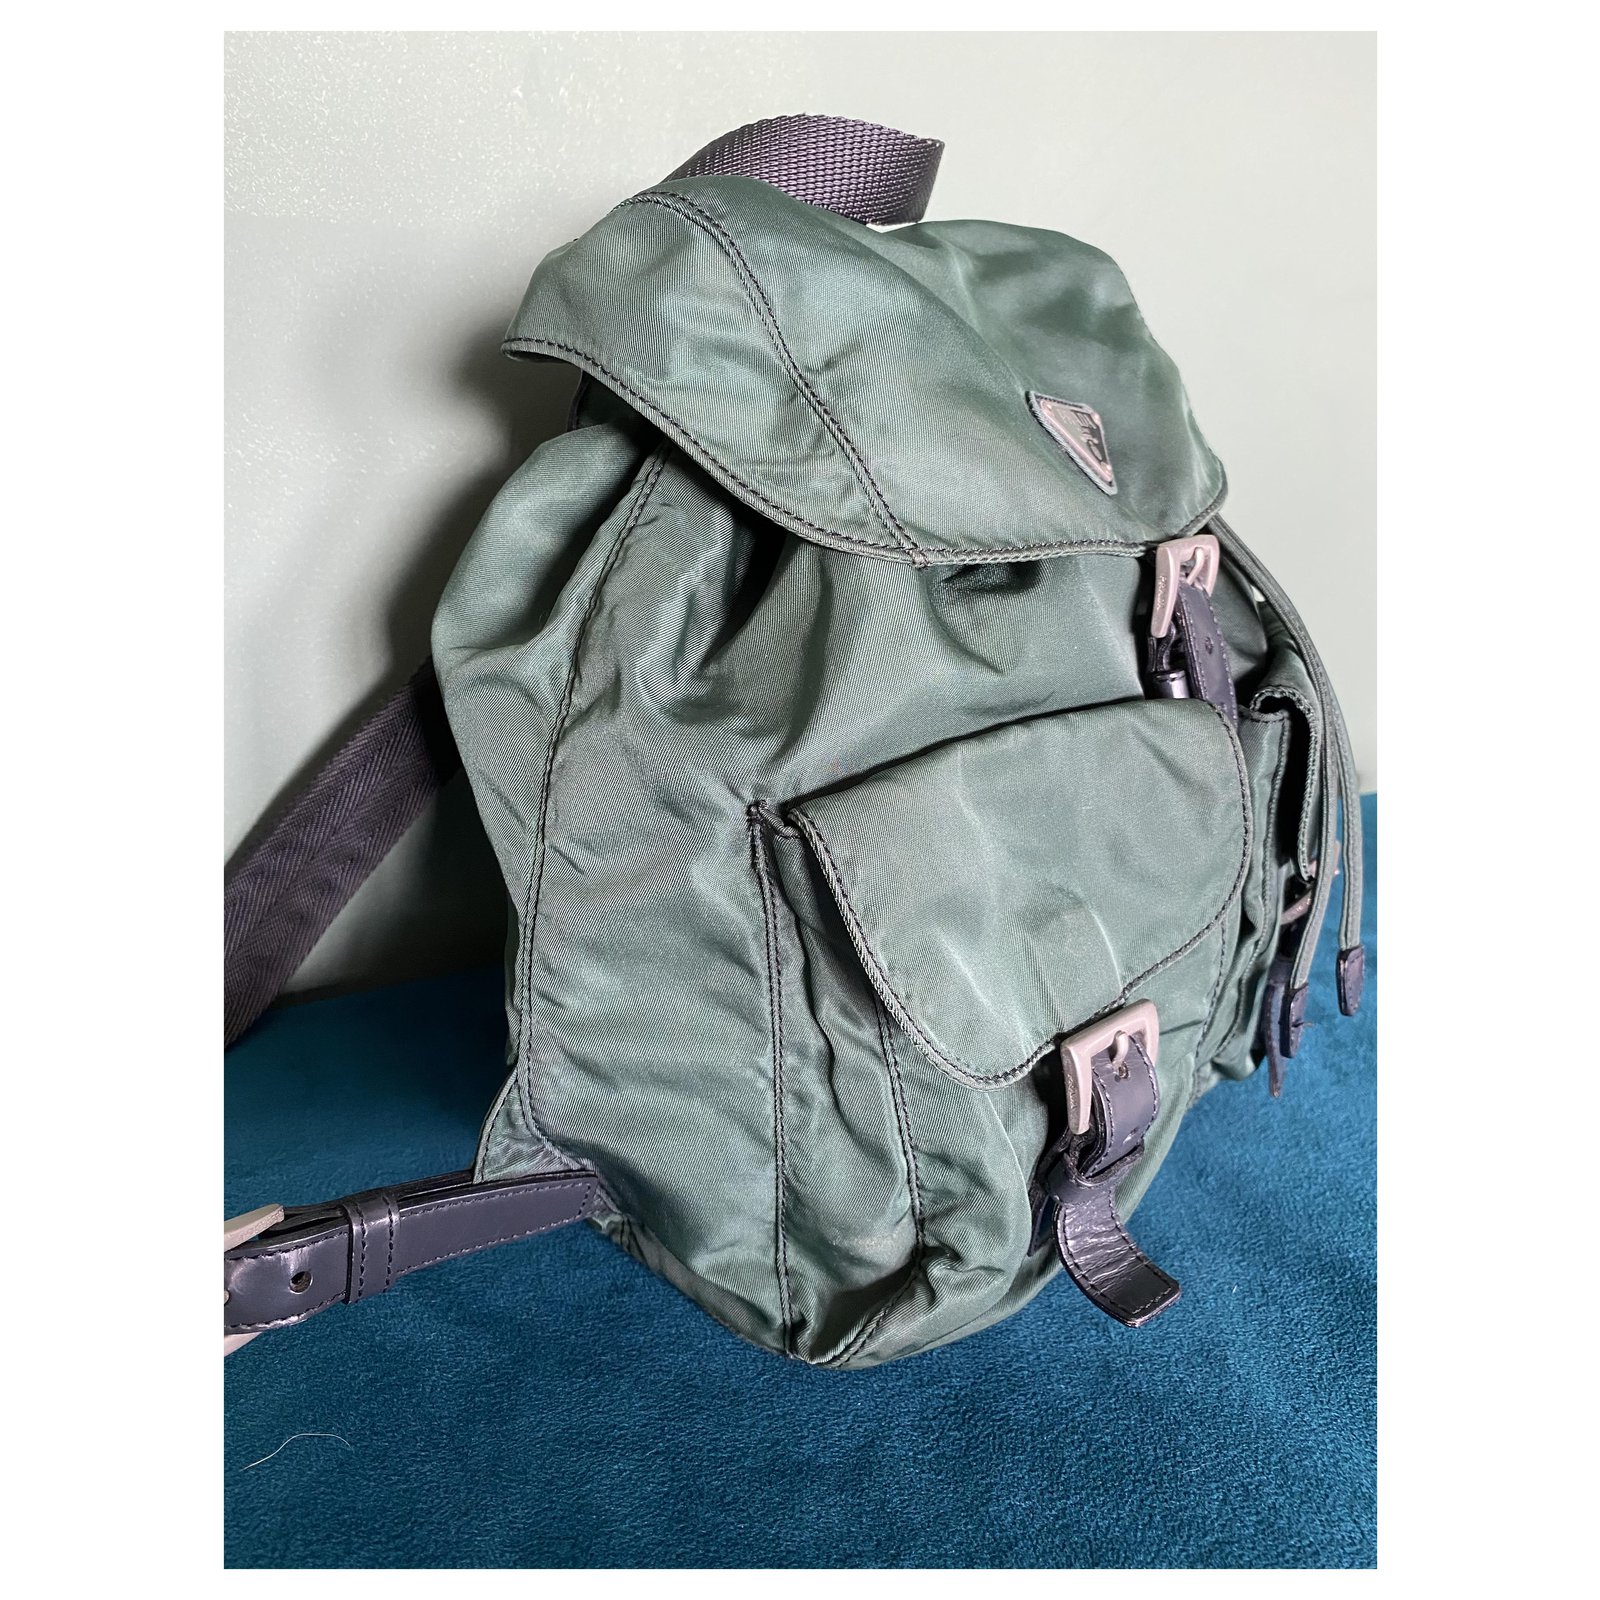 Mon sac à dos en nylon Prada (vintage) - La Minute Fashion